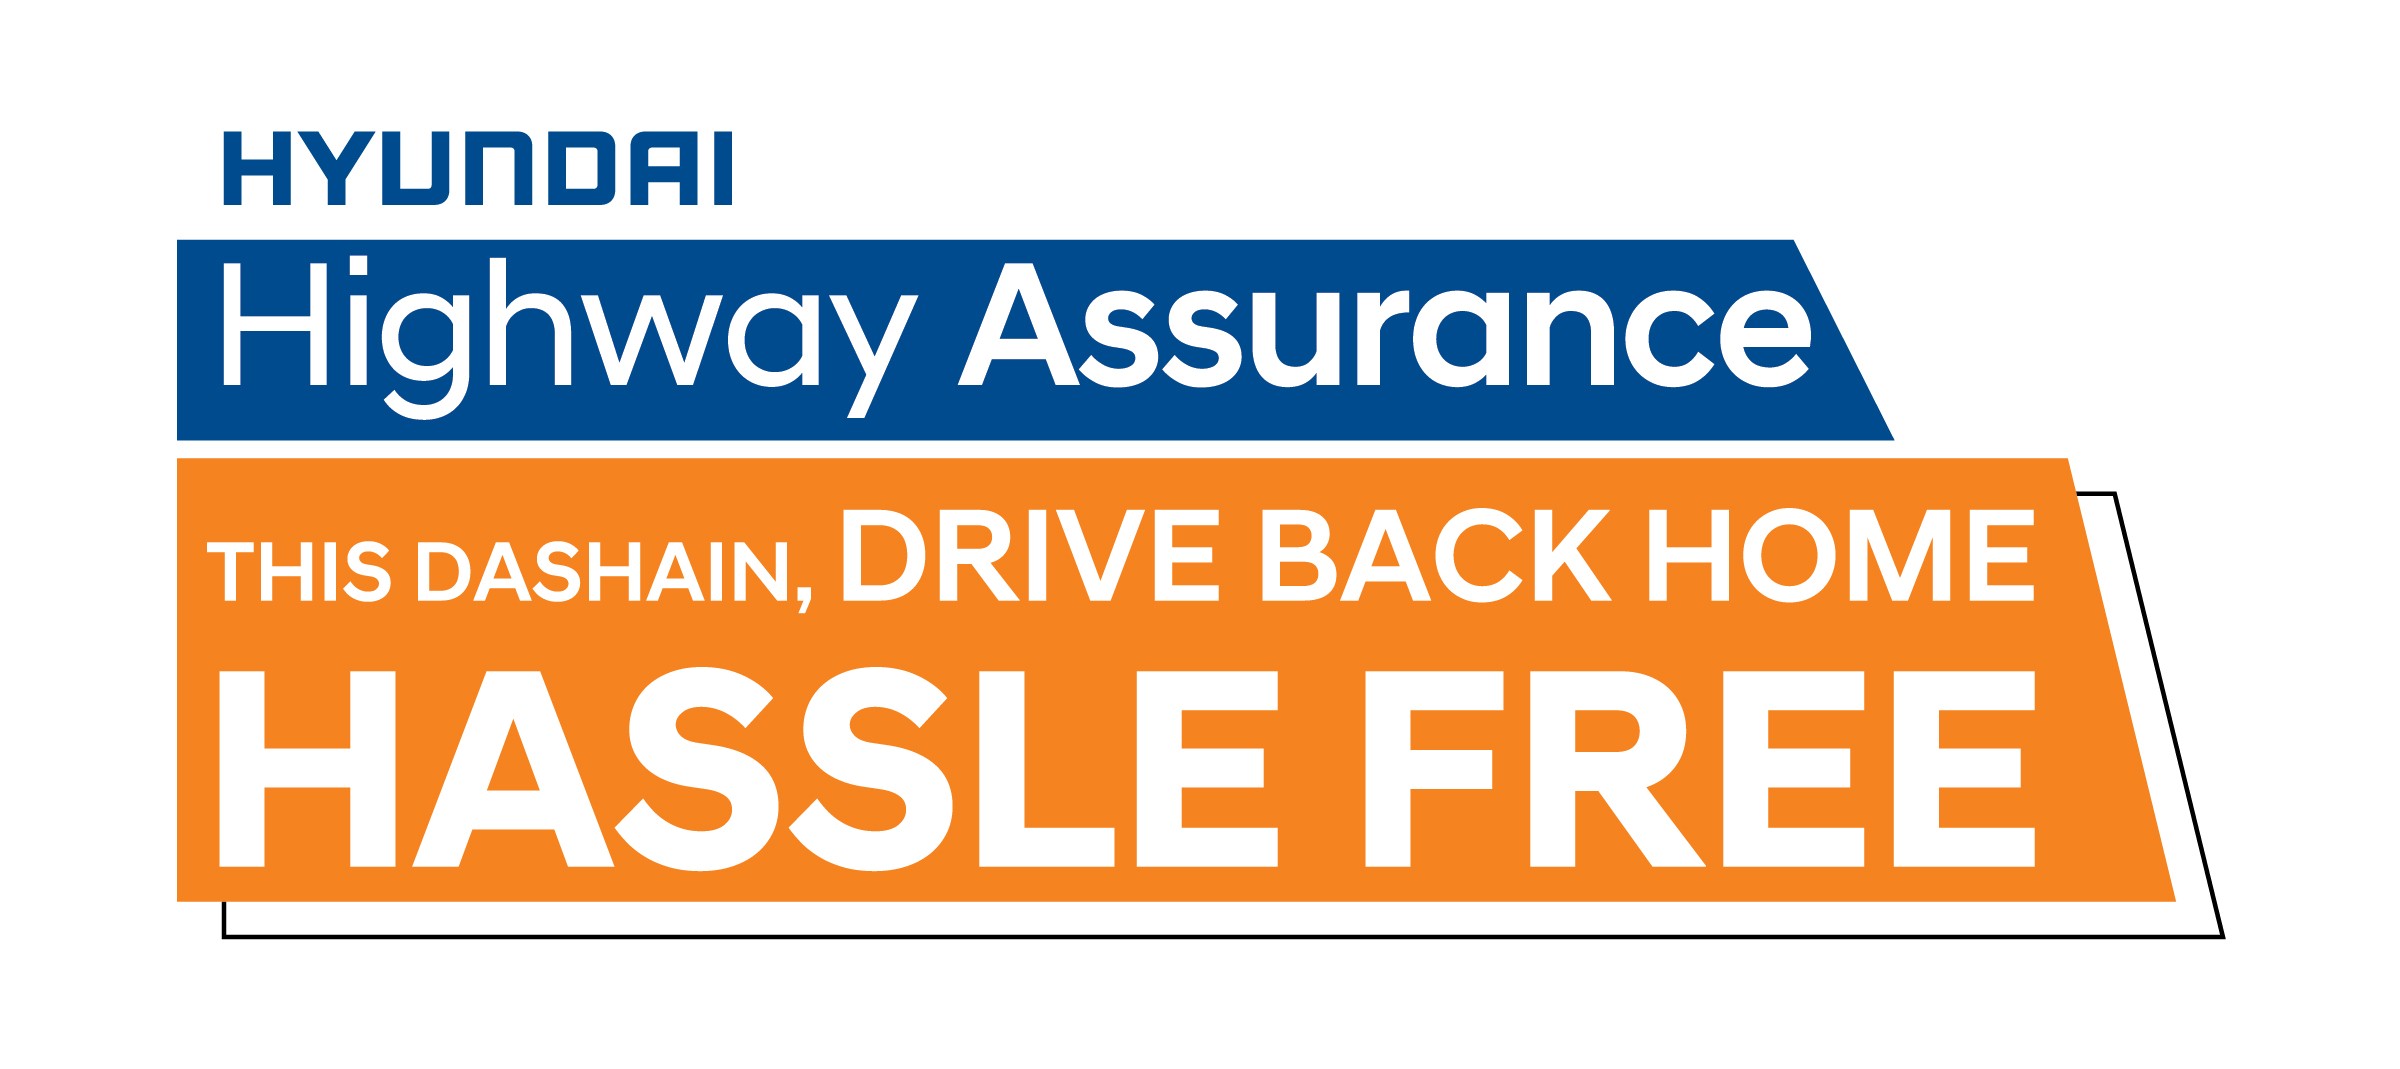 Hyundai highway assurance: Free checkup camp on highways